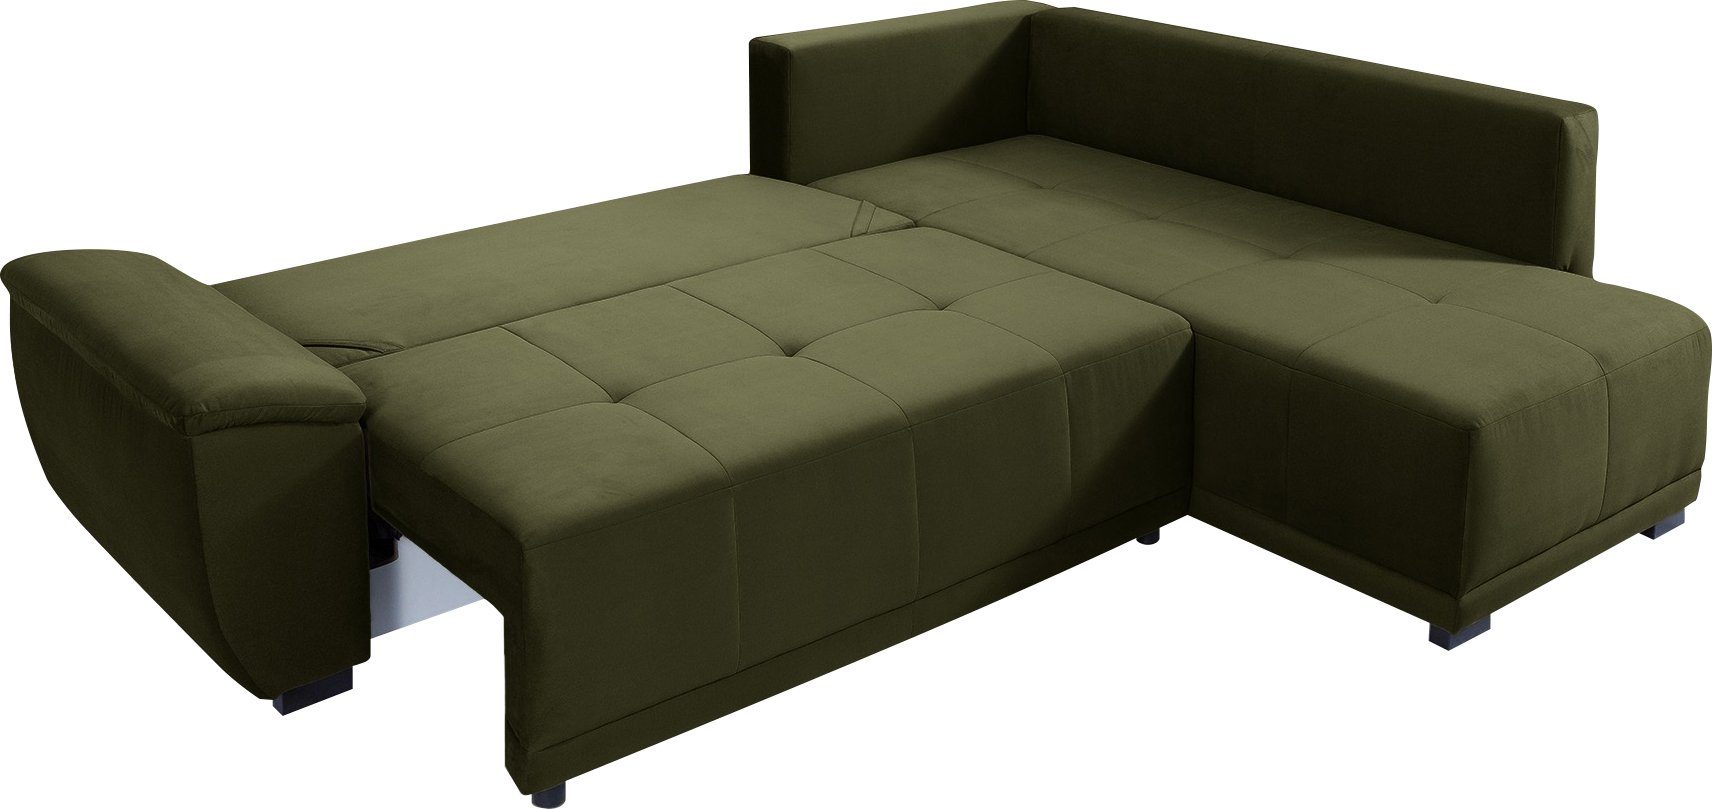 Ecksofa, 5 Rückenkissen Schlaffunktion inkl. sofa beidseitig, - fashion & Bettkasten, exxpo mane